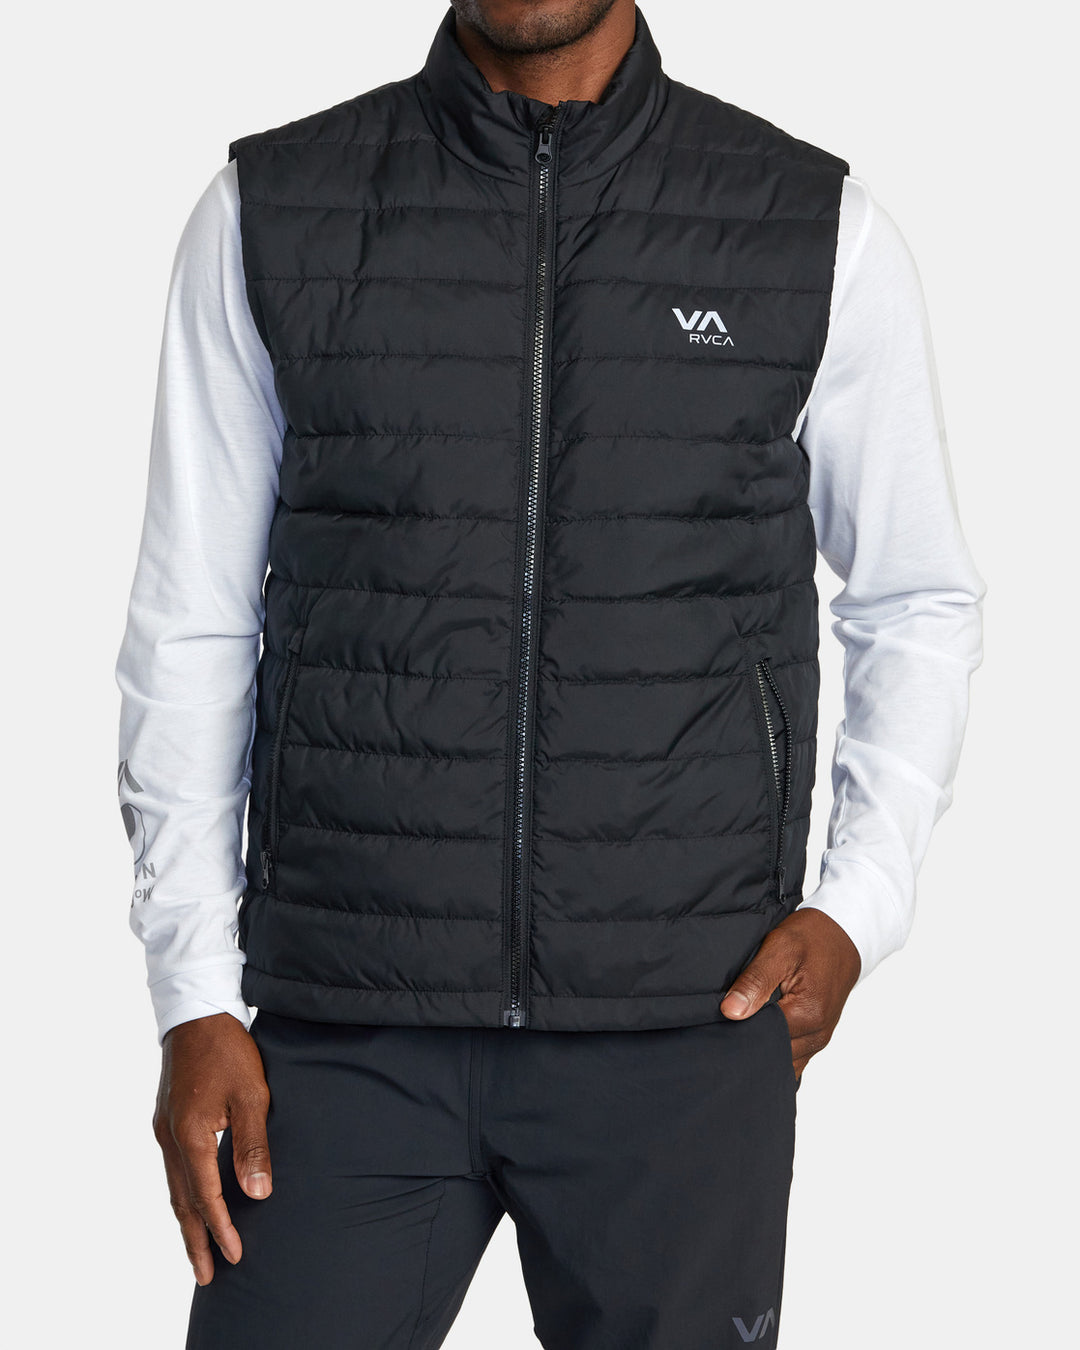 RVCA Packable Puffa Puffer Vest - Black - Sun Diego Boardshop